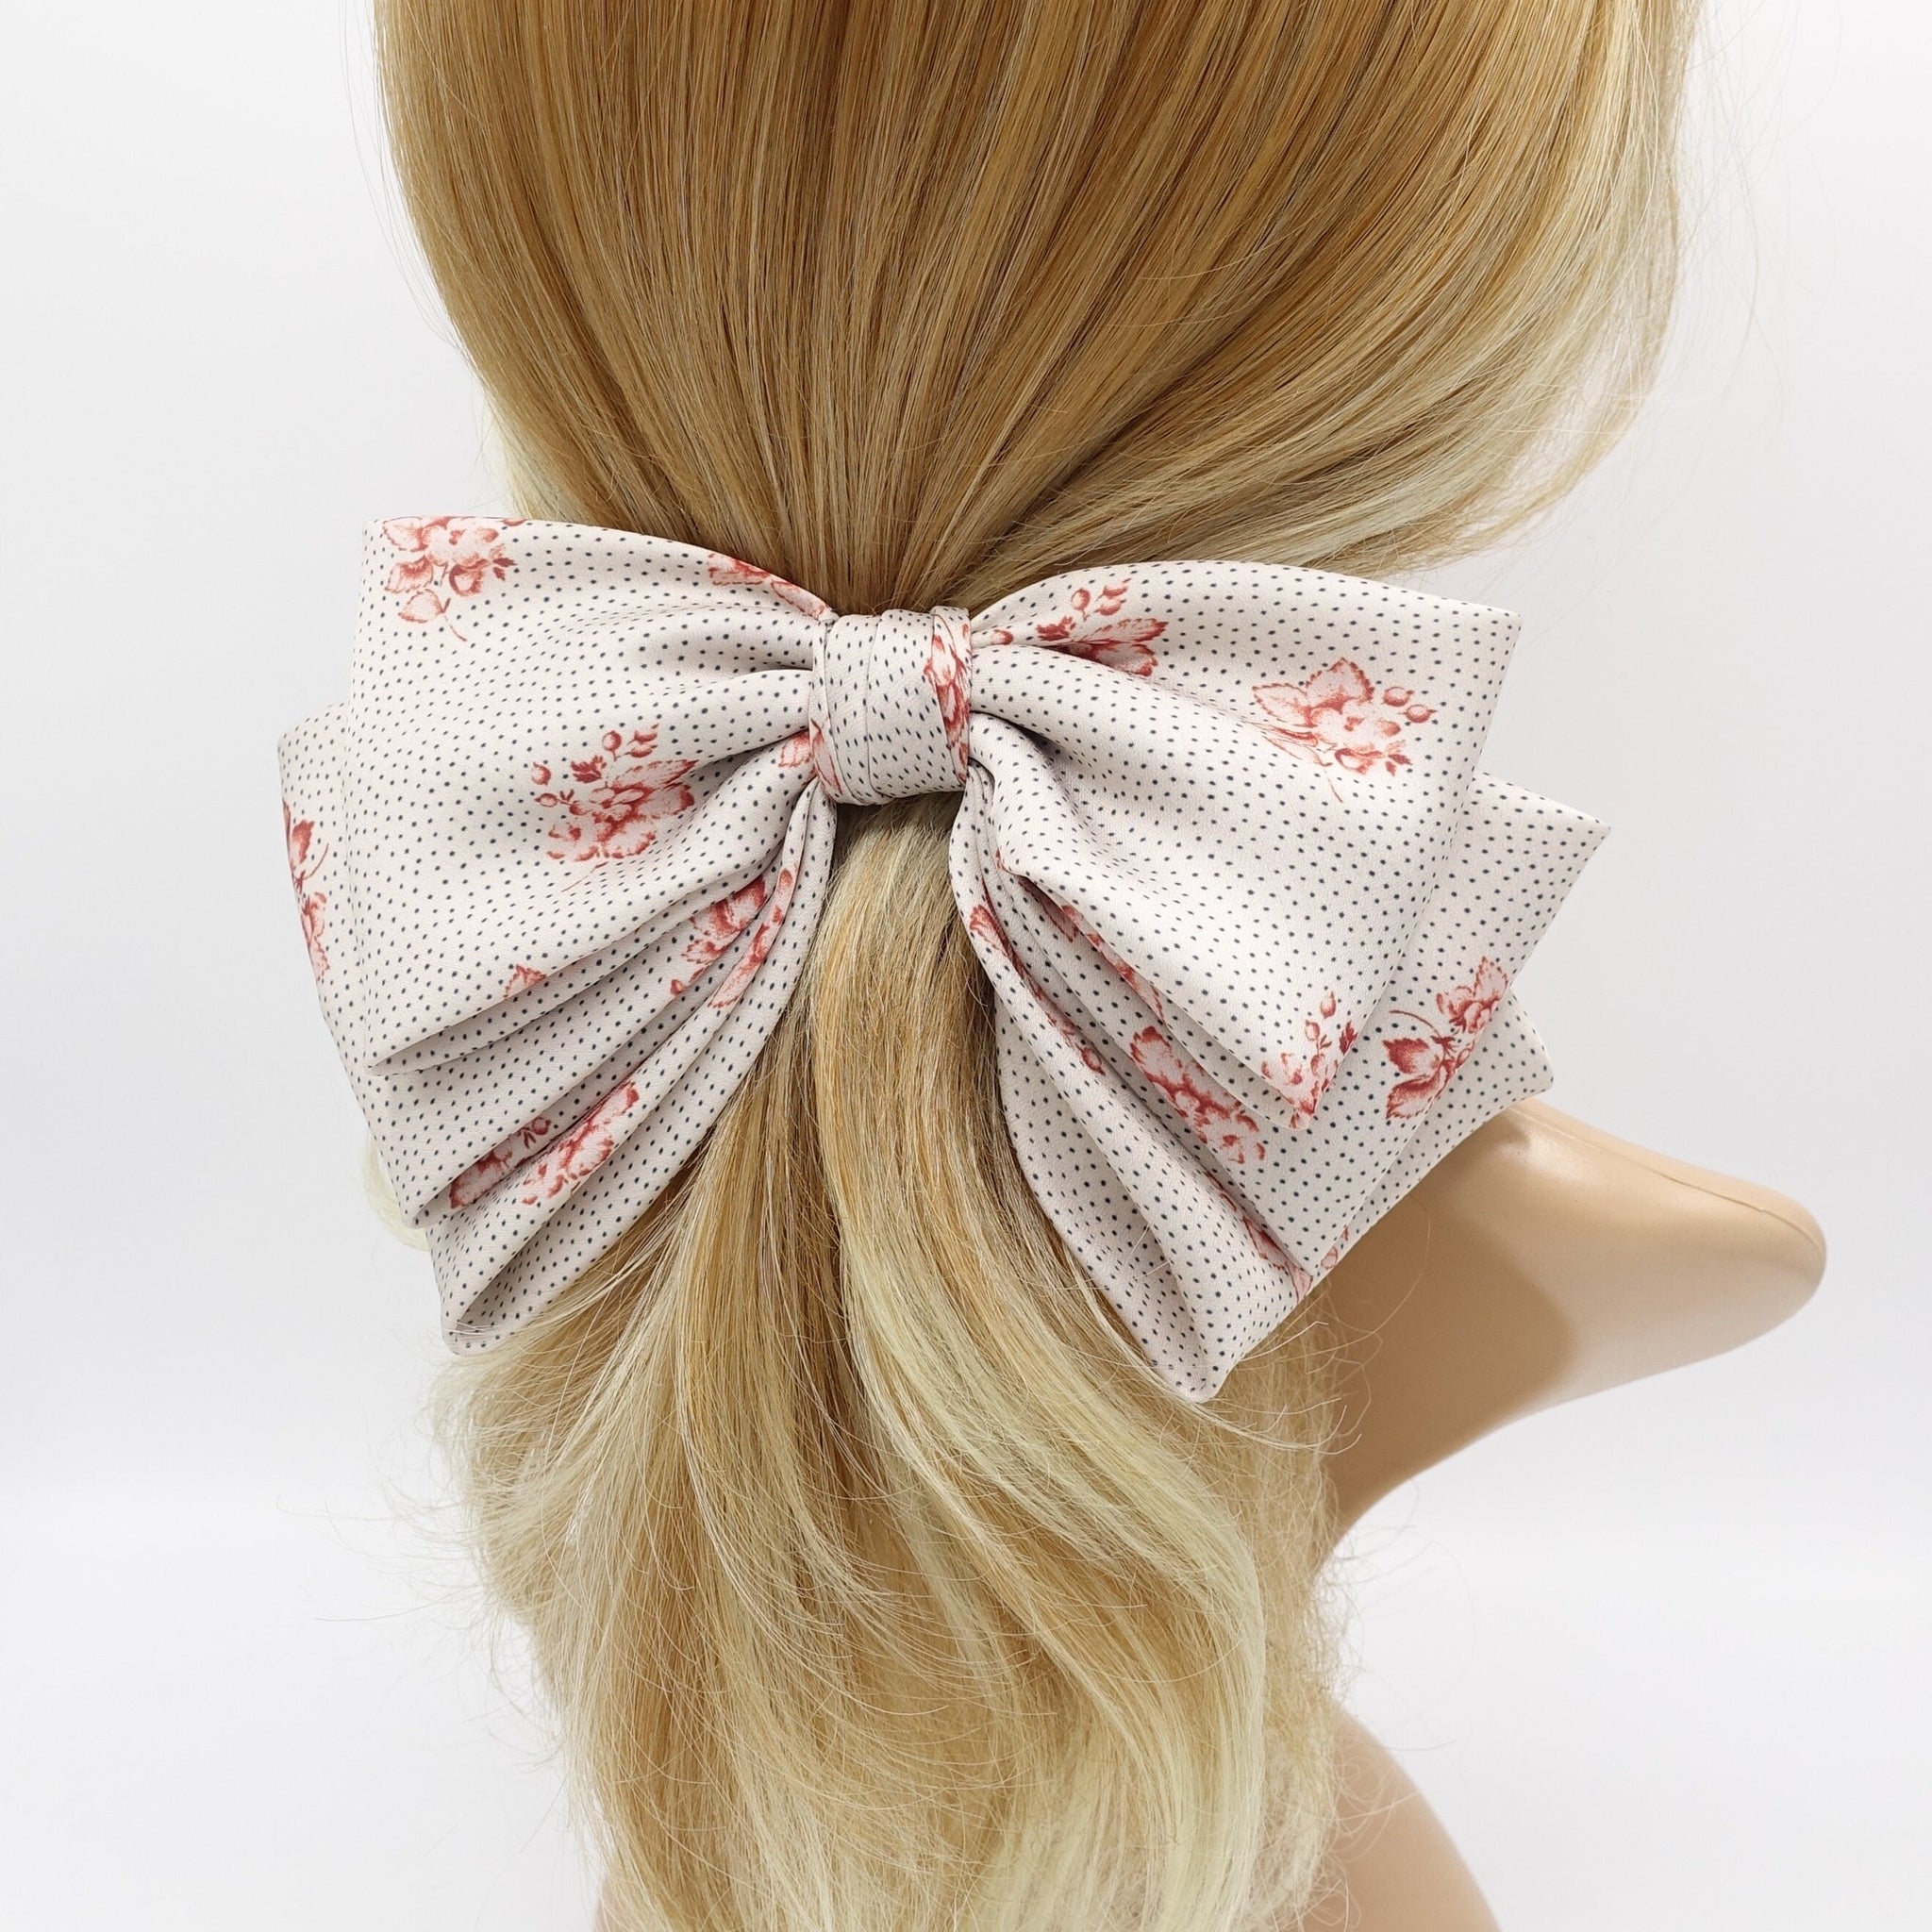 veryshine.com Barrette (Bow) Cream beige floral satin hair bow